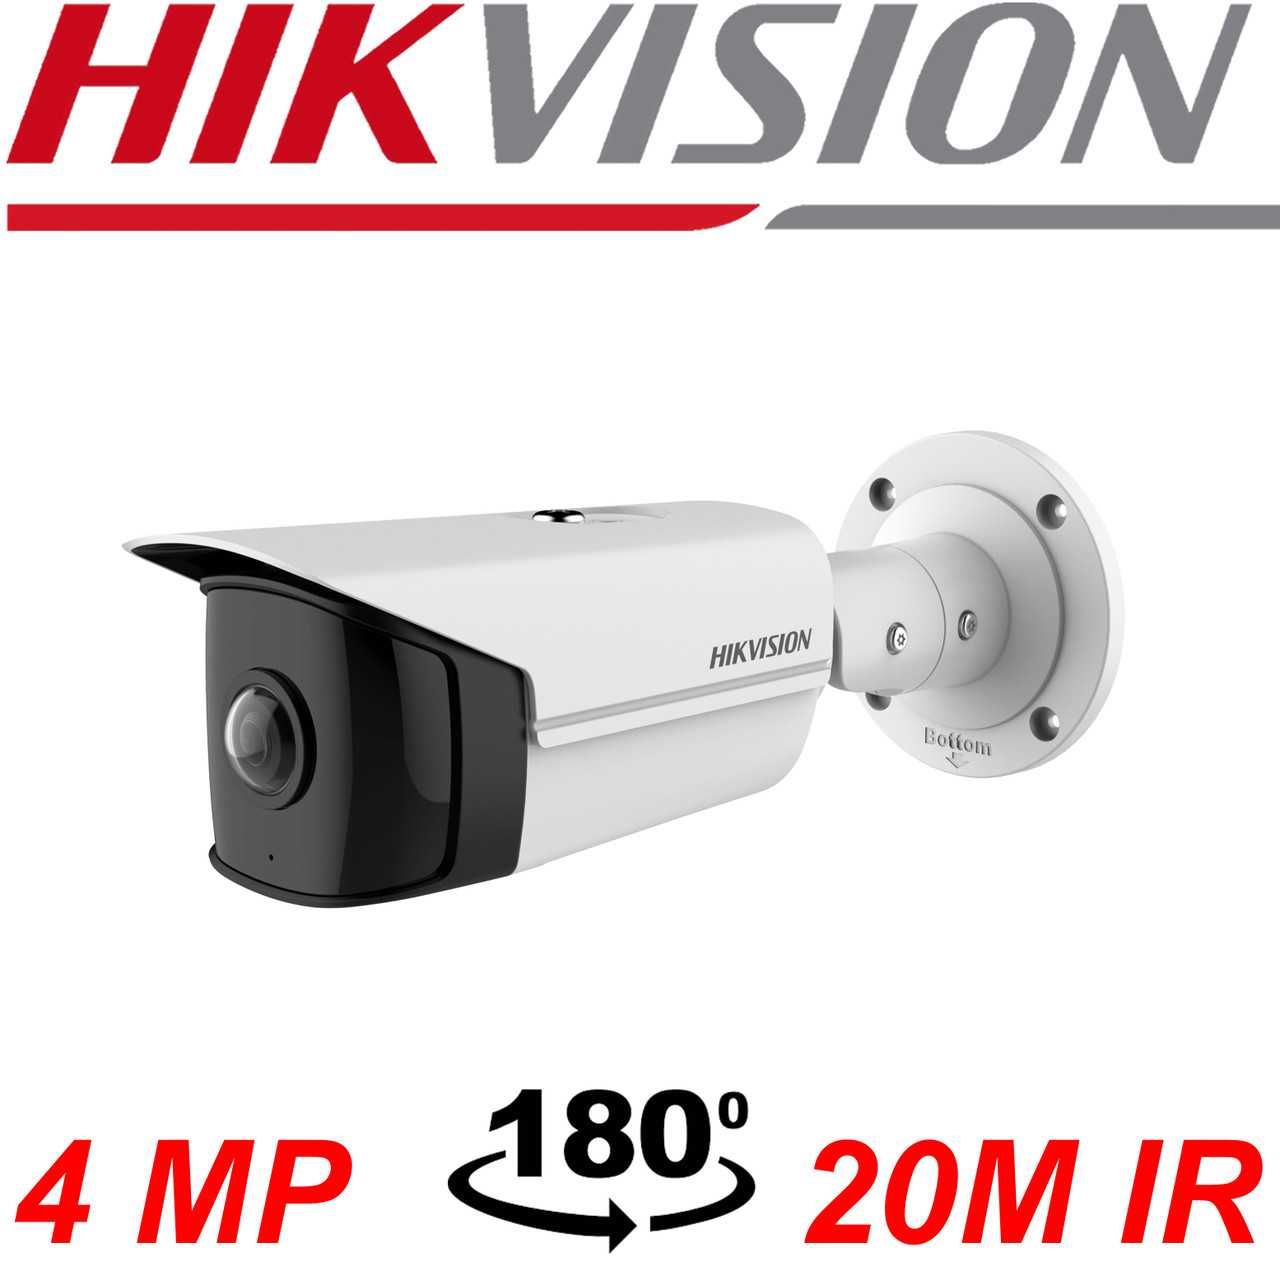 Акция 2024 IP камера Hikvision 180 (рыбий глаз) DS-2CD2T45G0P-I